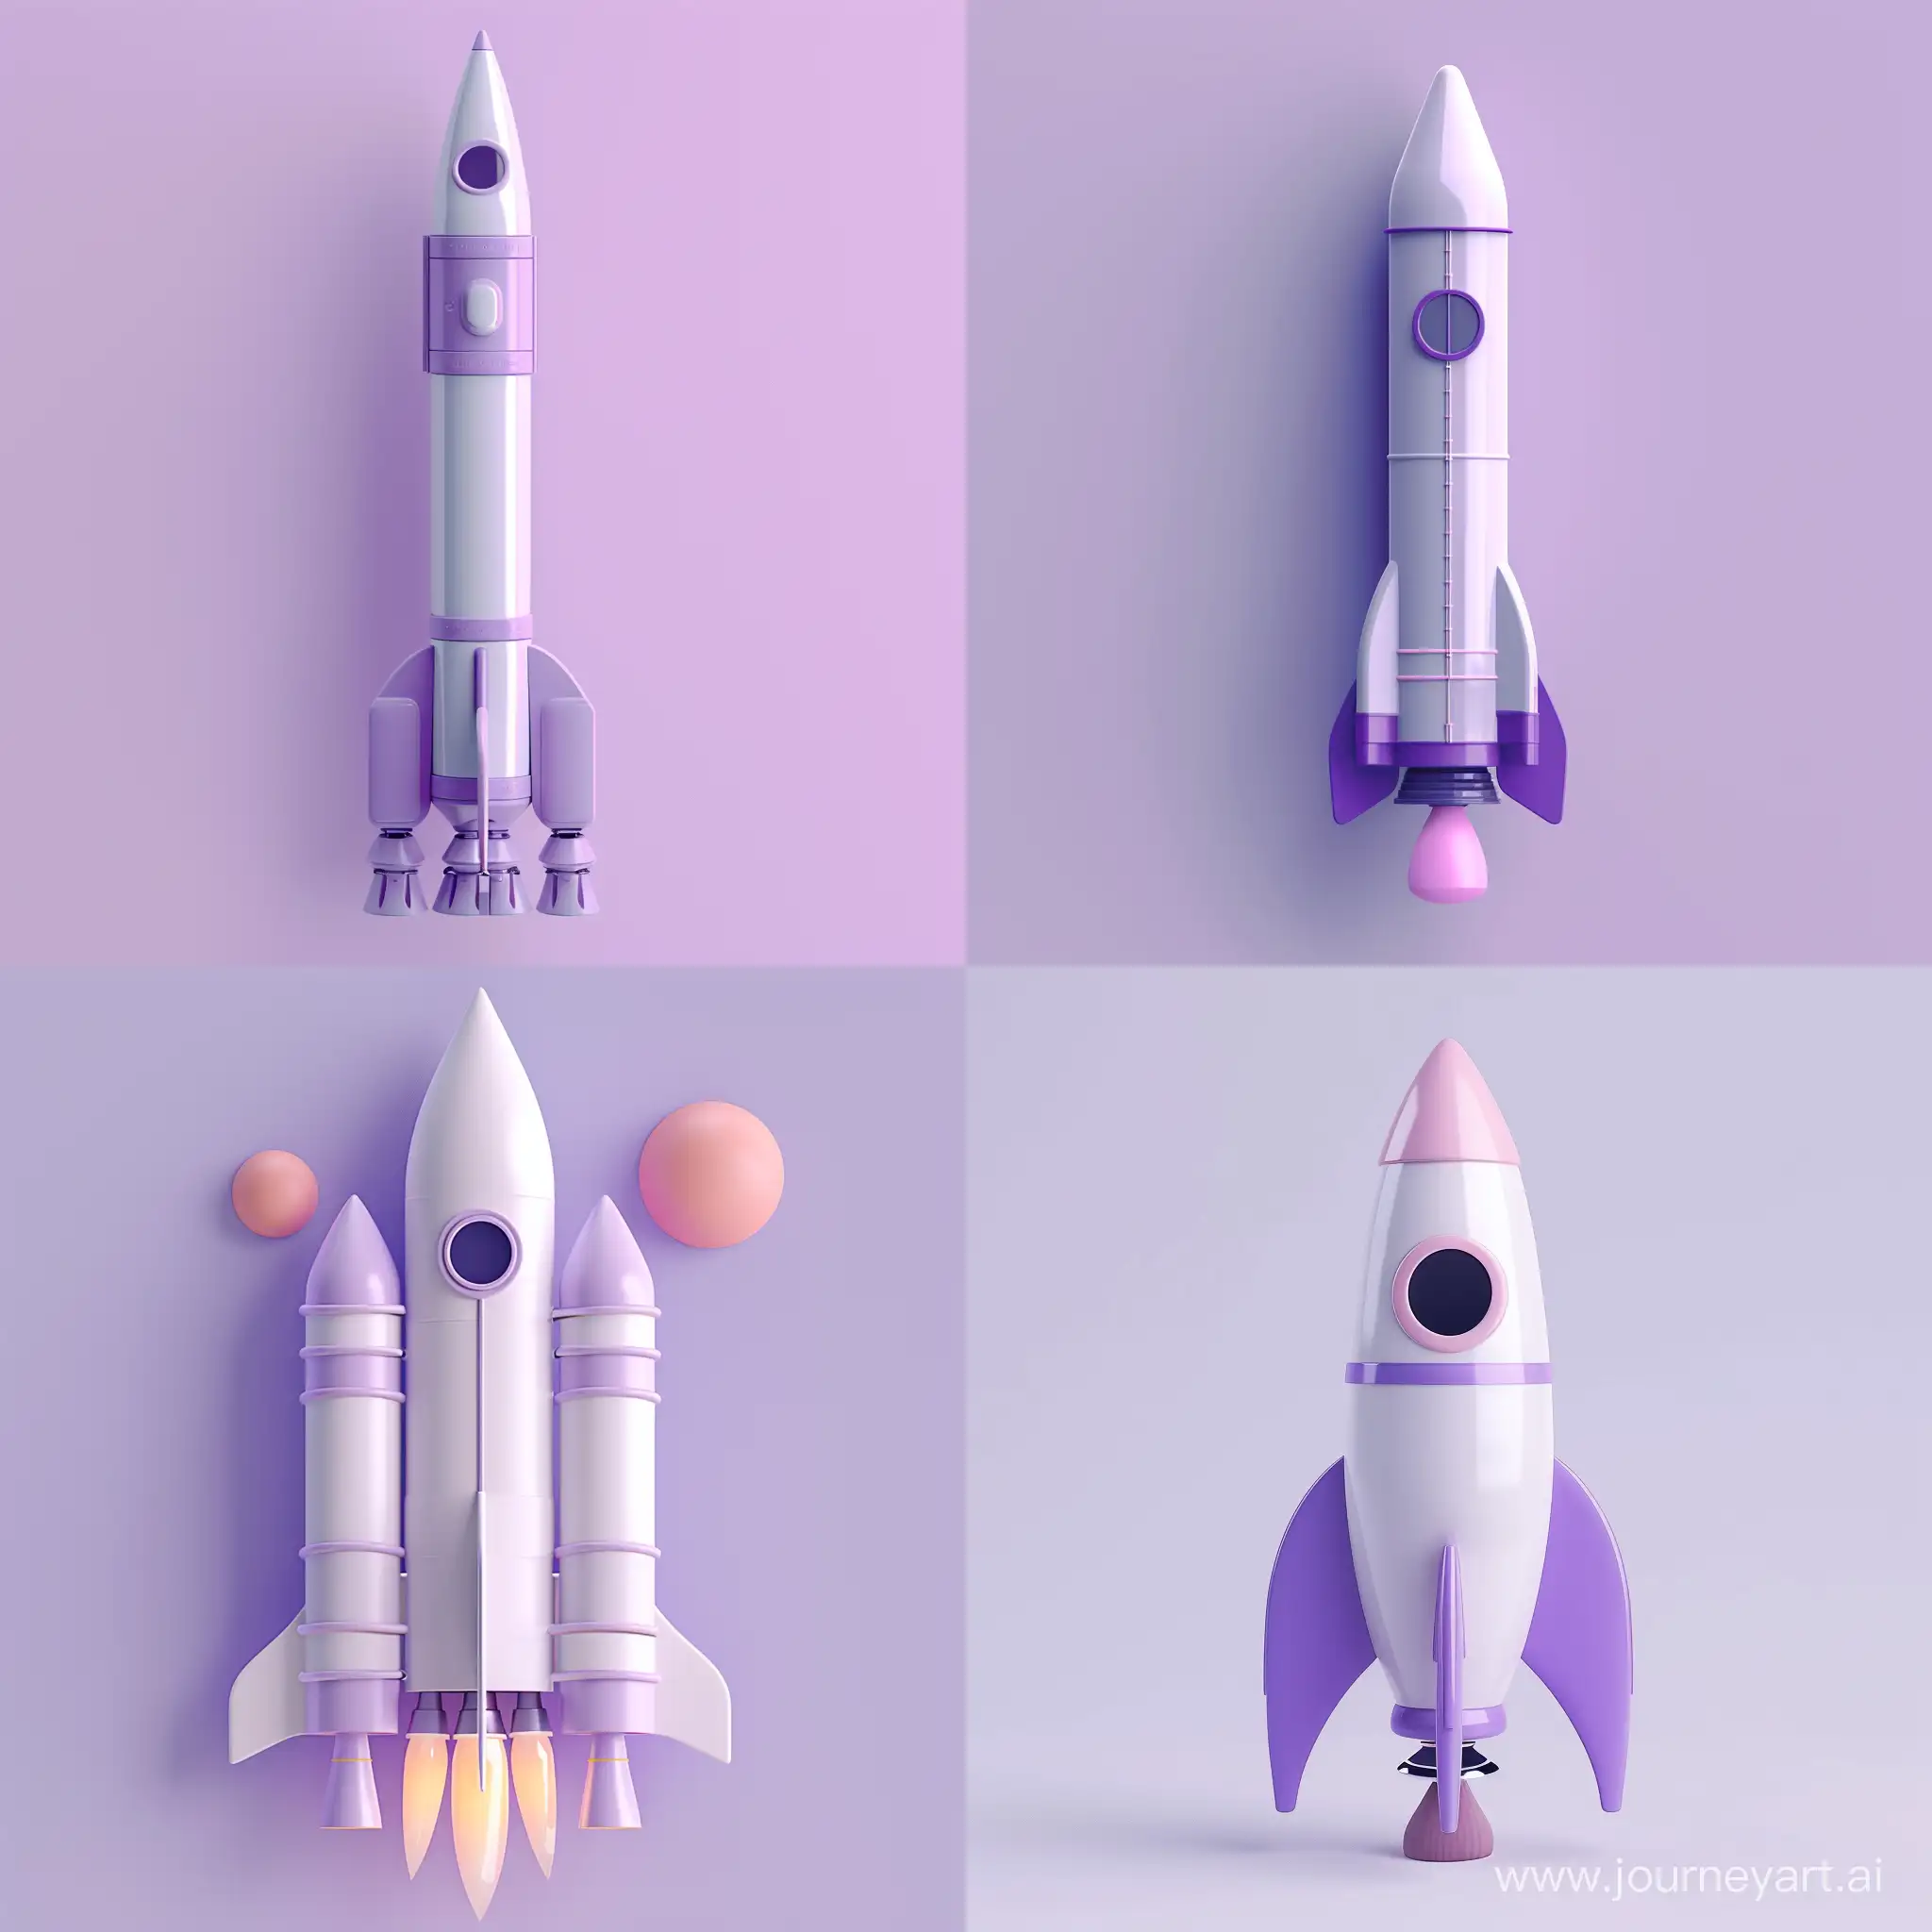 Purple-Rocket-Construction-in-Minimalist-Pastel-Tones-HighQuality-3D-Illustration